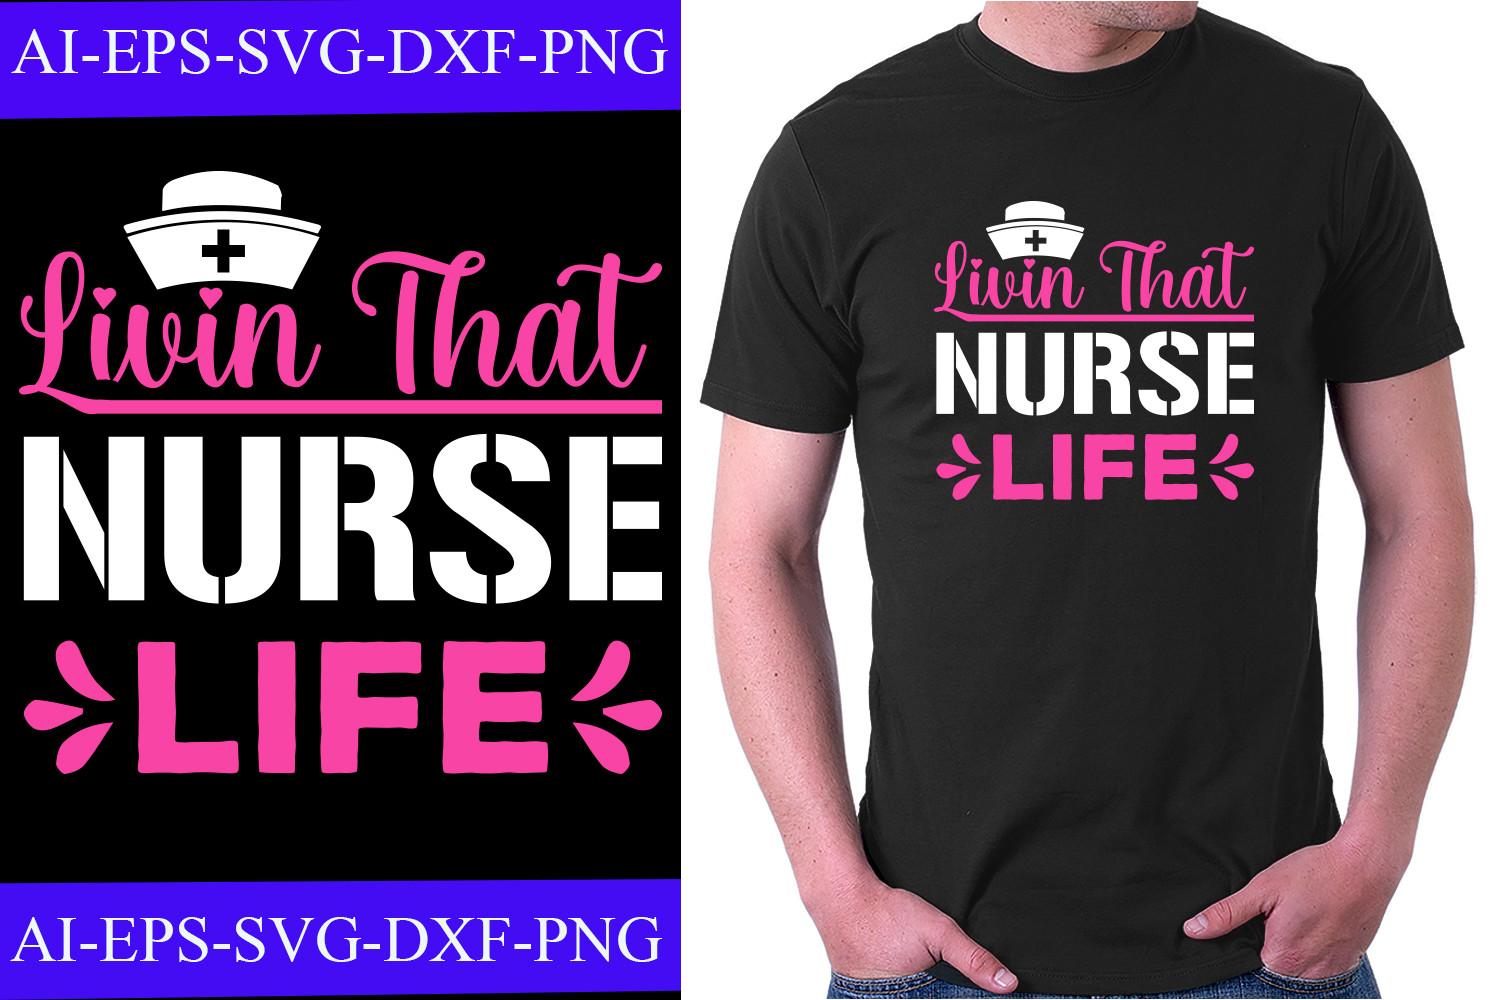 Livin That Nurse Life T-shirt Design